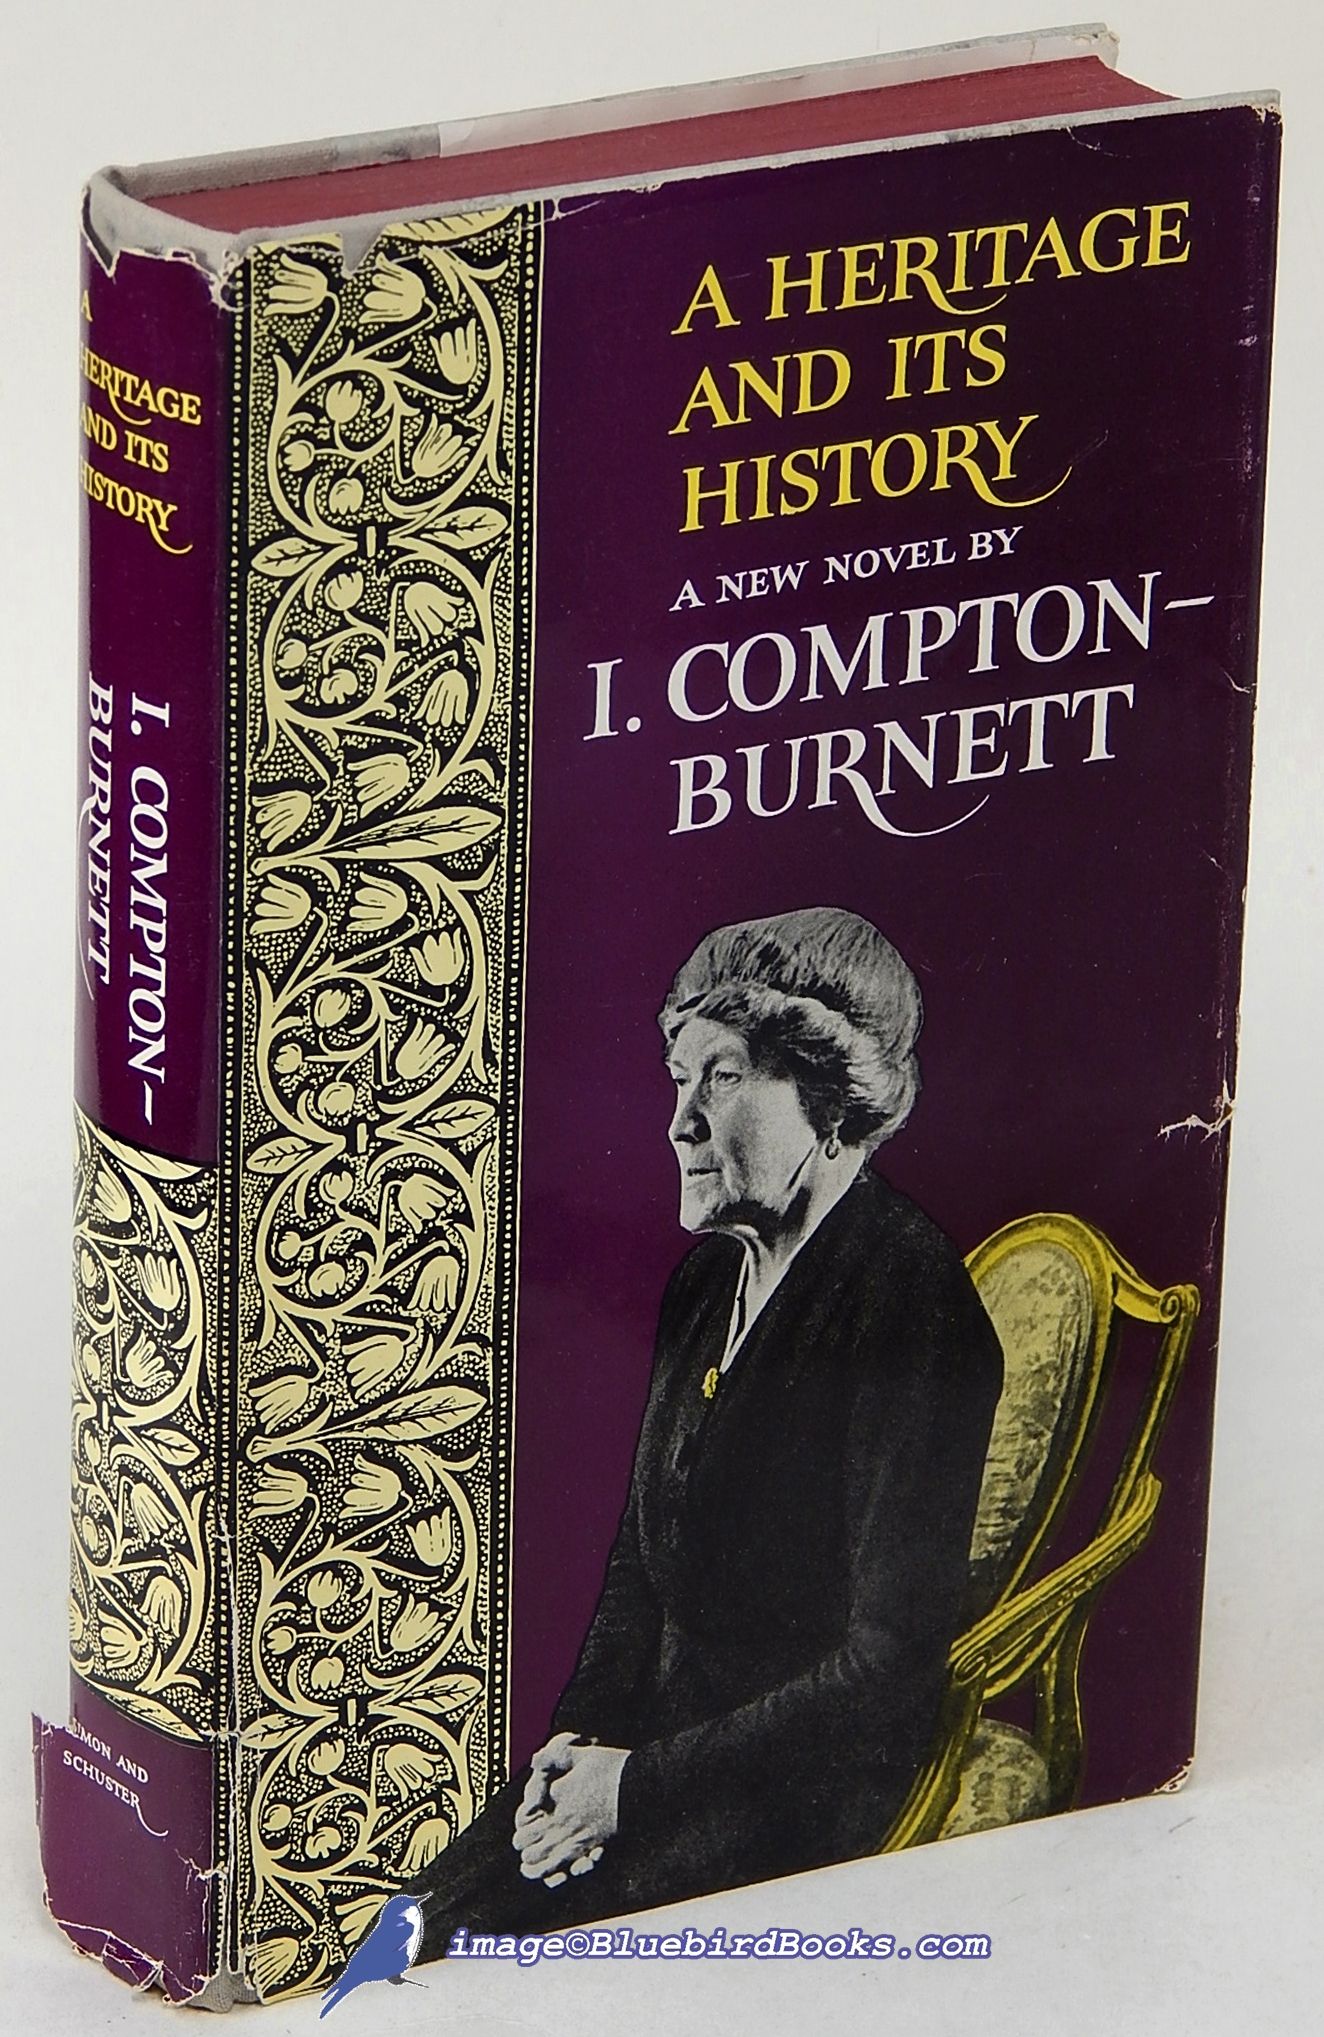 COMPTON-BURNETT, I. - A Heritage and Its History